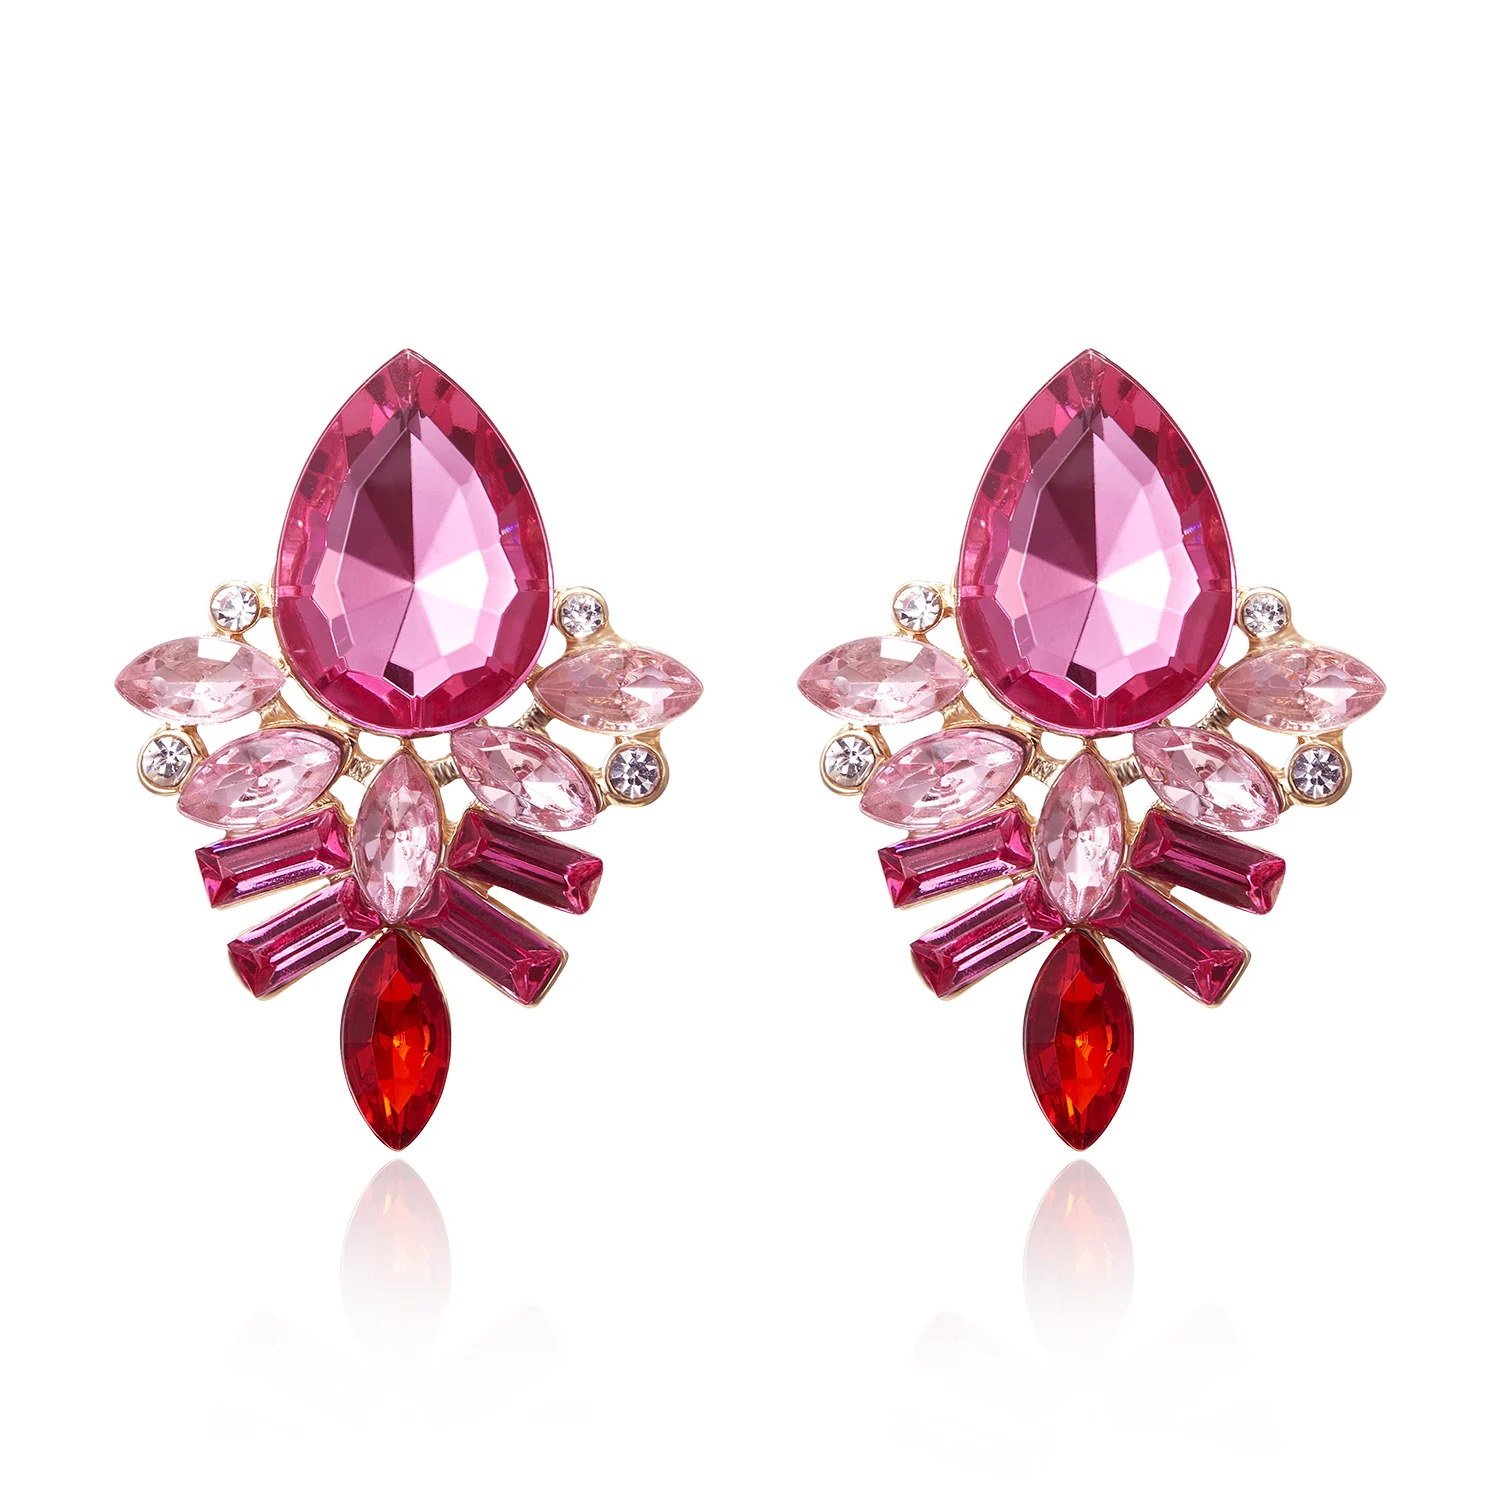 HTB1KhpwXELrK1Rjy1zbq6AenFXa3 - NEW Women Fashion Jewelry Style Blue/Black/Pink Earrings Handmade Rhinestone sweet stud crystal Dangle earrings for women girl